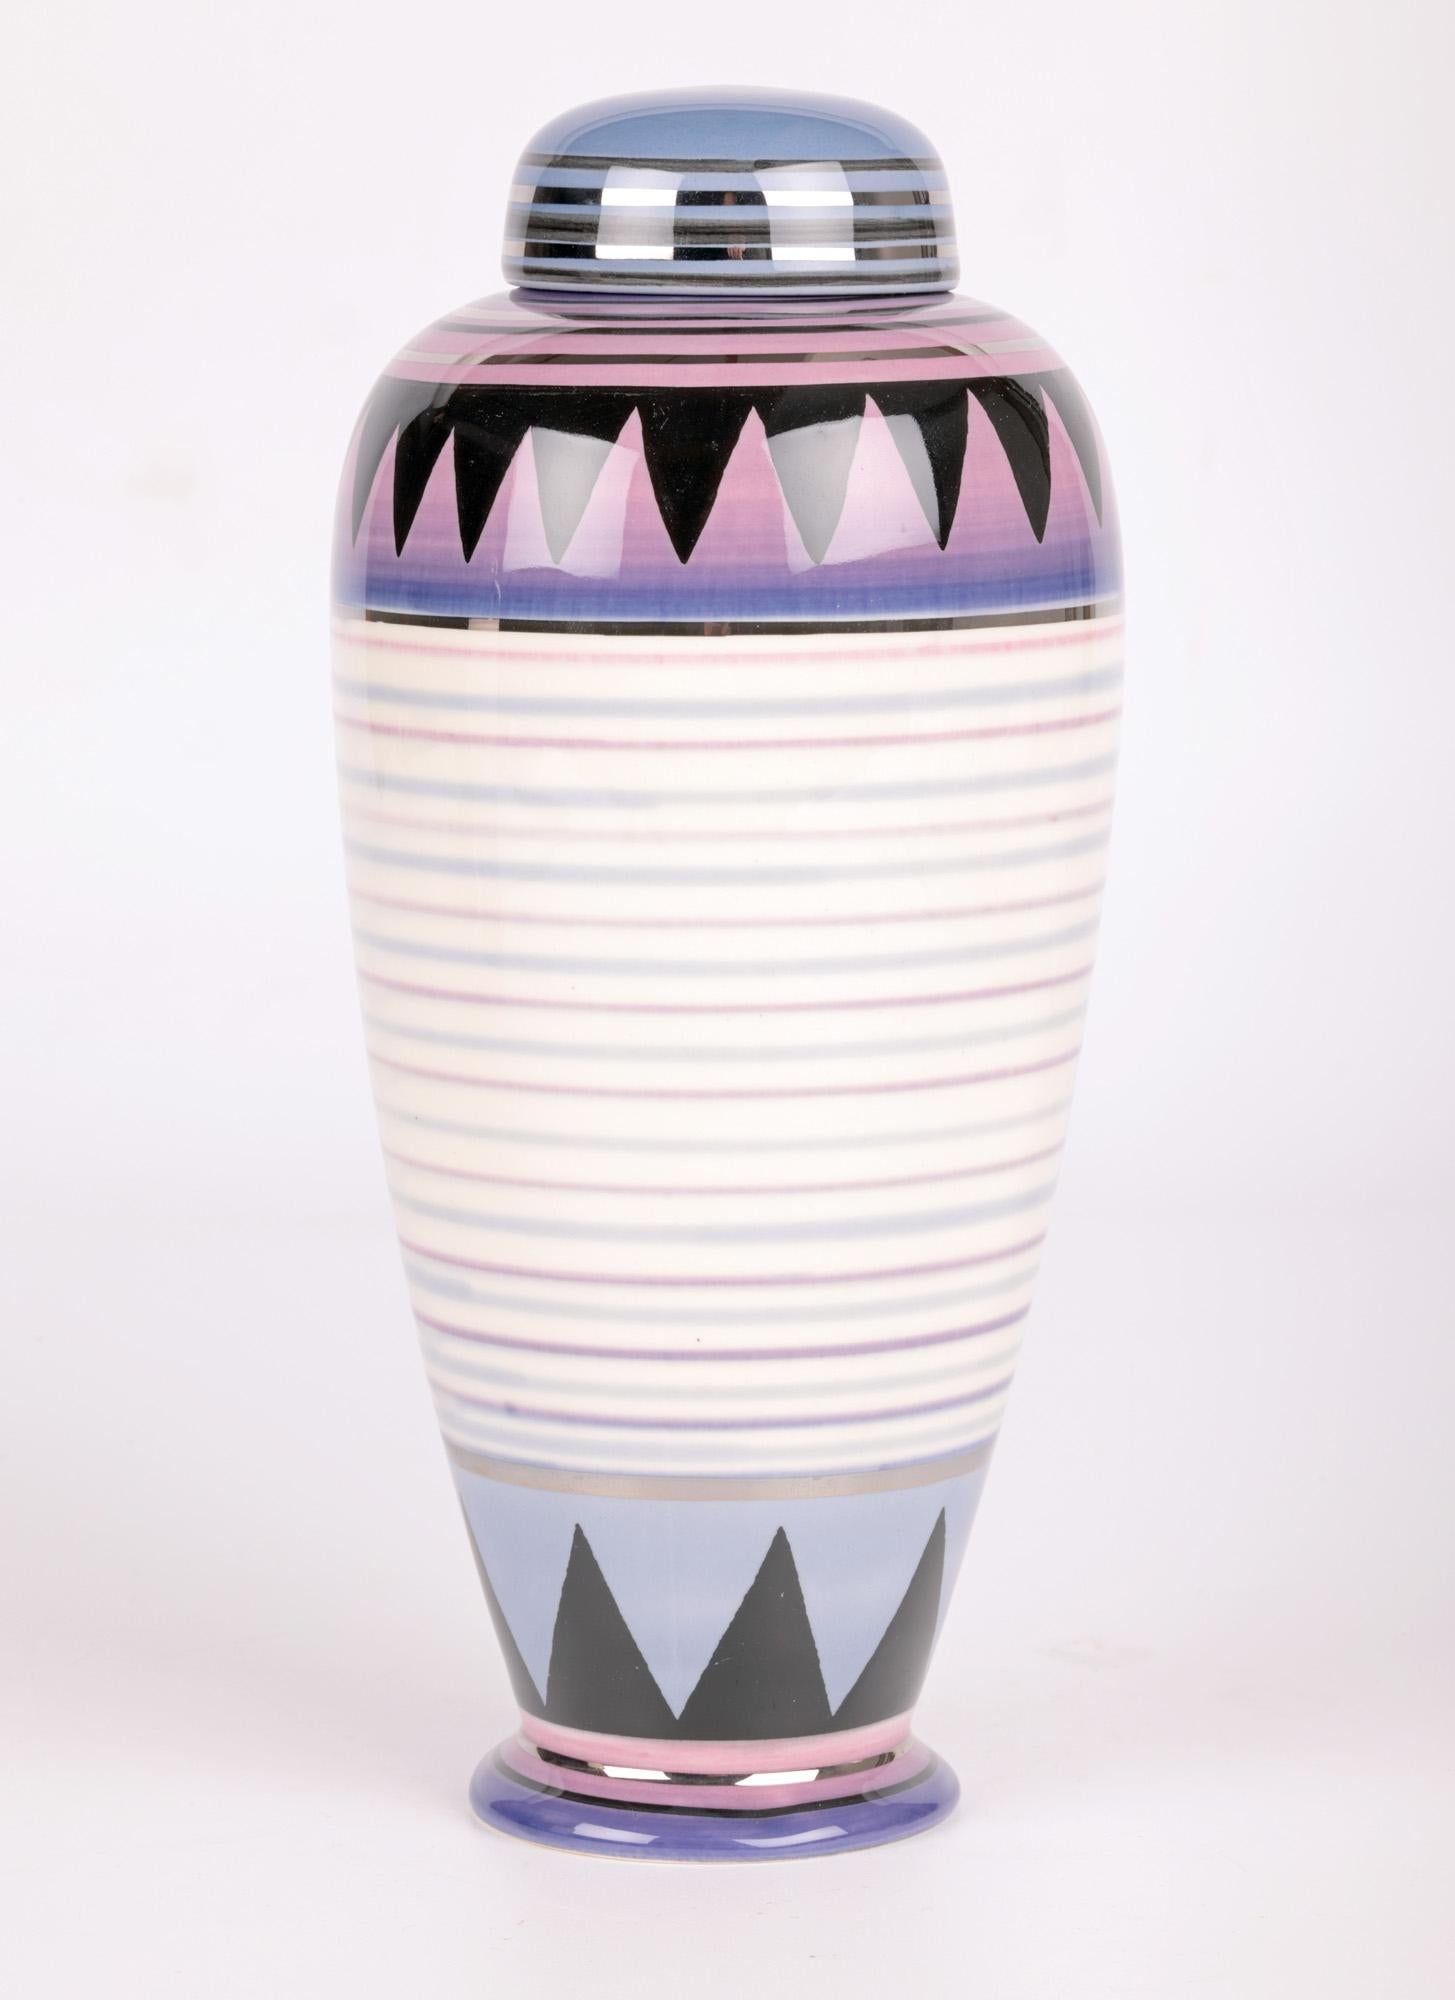 Moorland Pottery Pair Ceramic Lustre Lidded Vases   For Sale 6